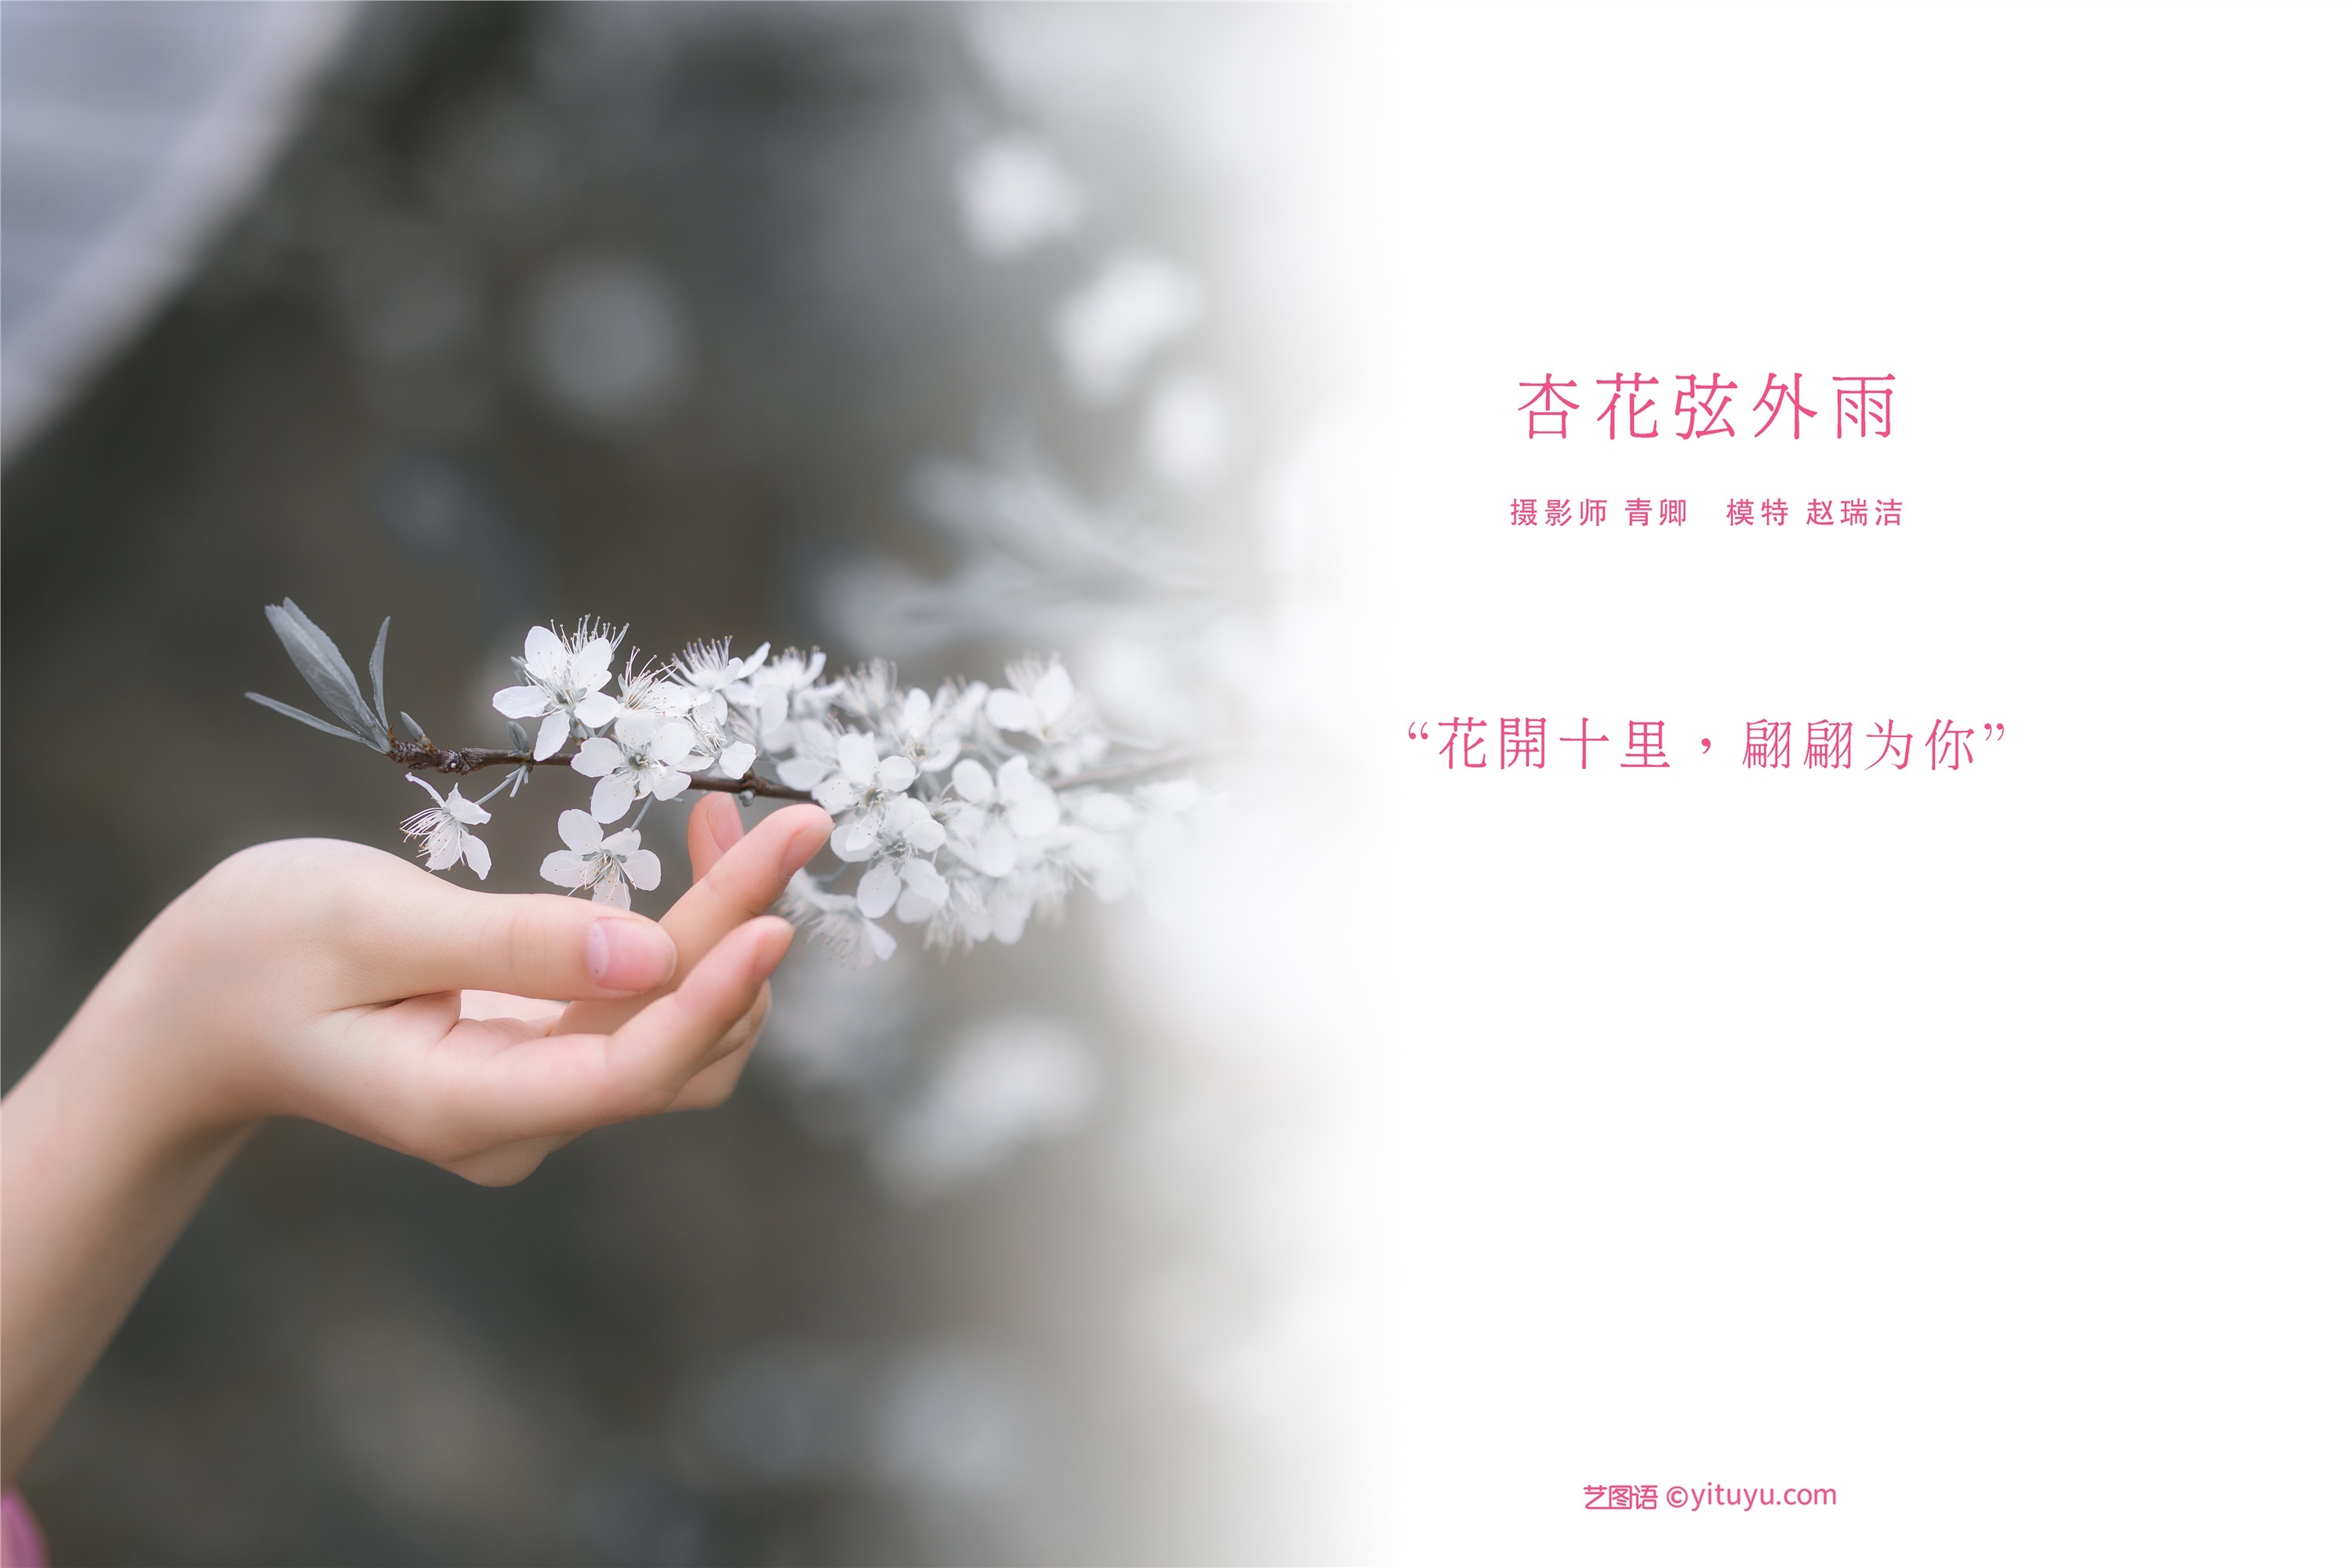 YITUYU art picture language 2021.08.28 apricot flower string outside the rain Zhao Ruijie _ez